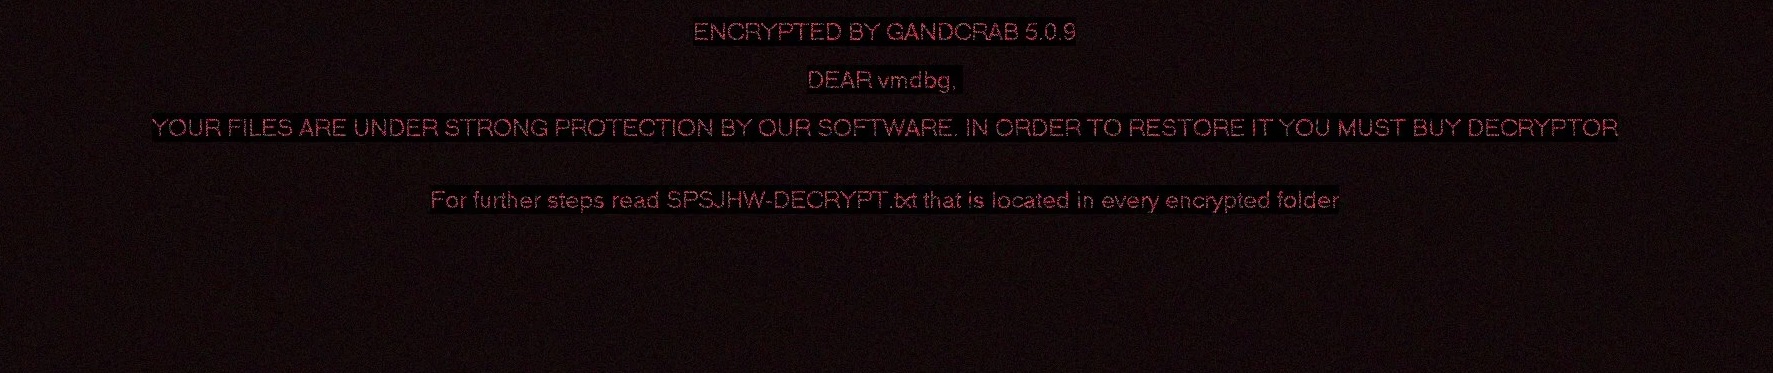 gandcrab 5.0.9 cryptovirus ransomware sfondo del desktop